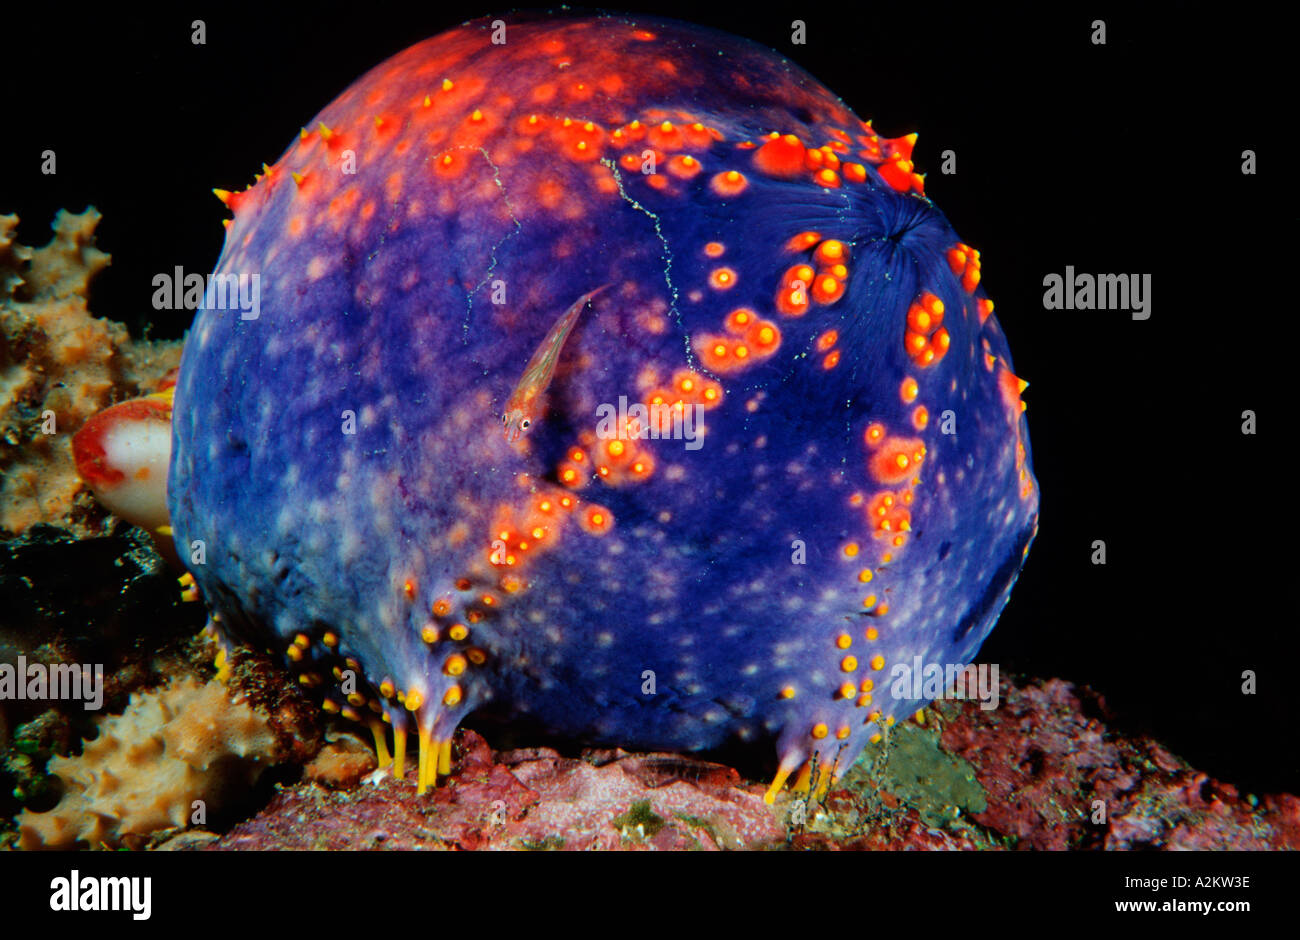 Sea apple with goby, Pseudocolochirus violaceus Stock Photo